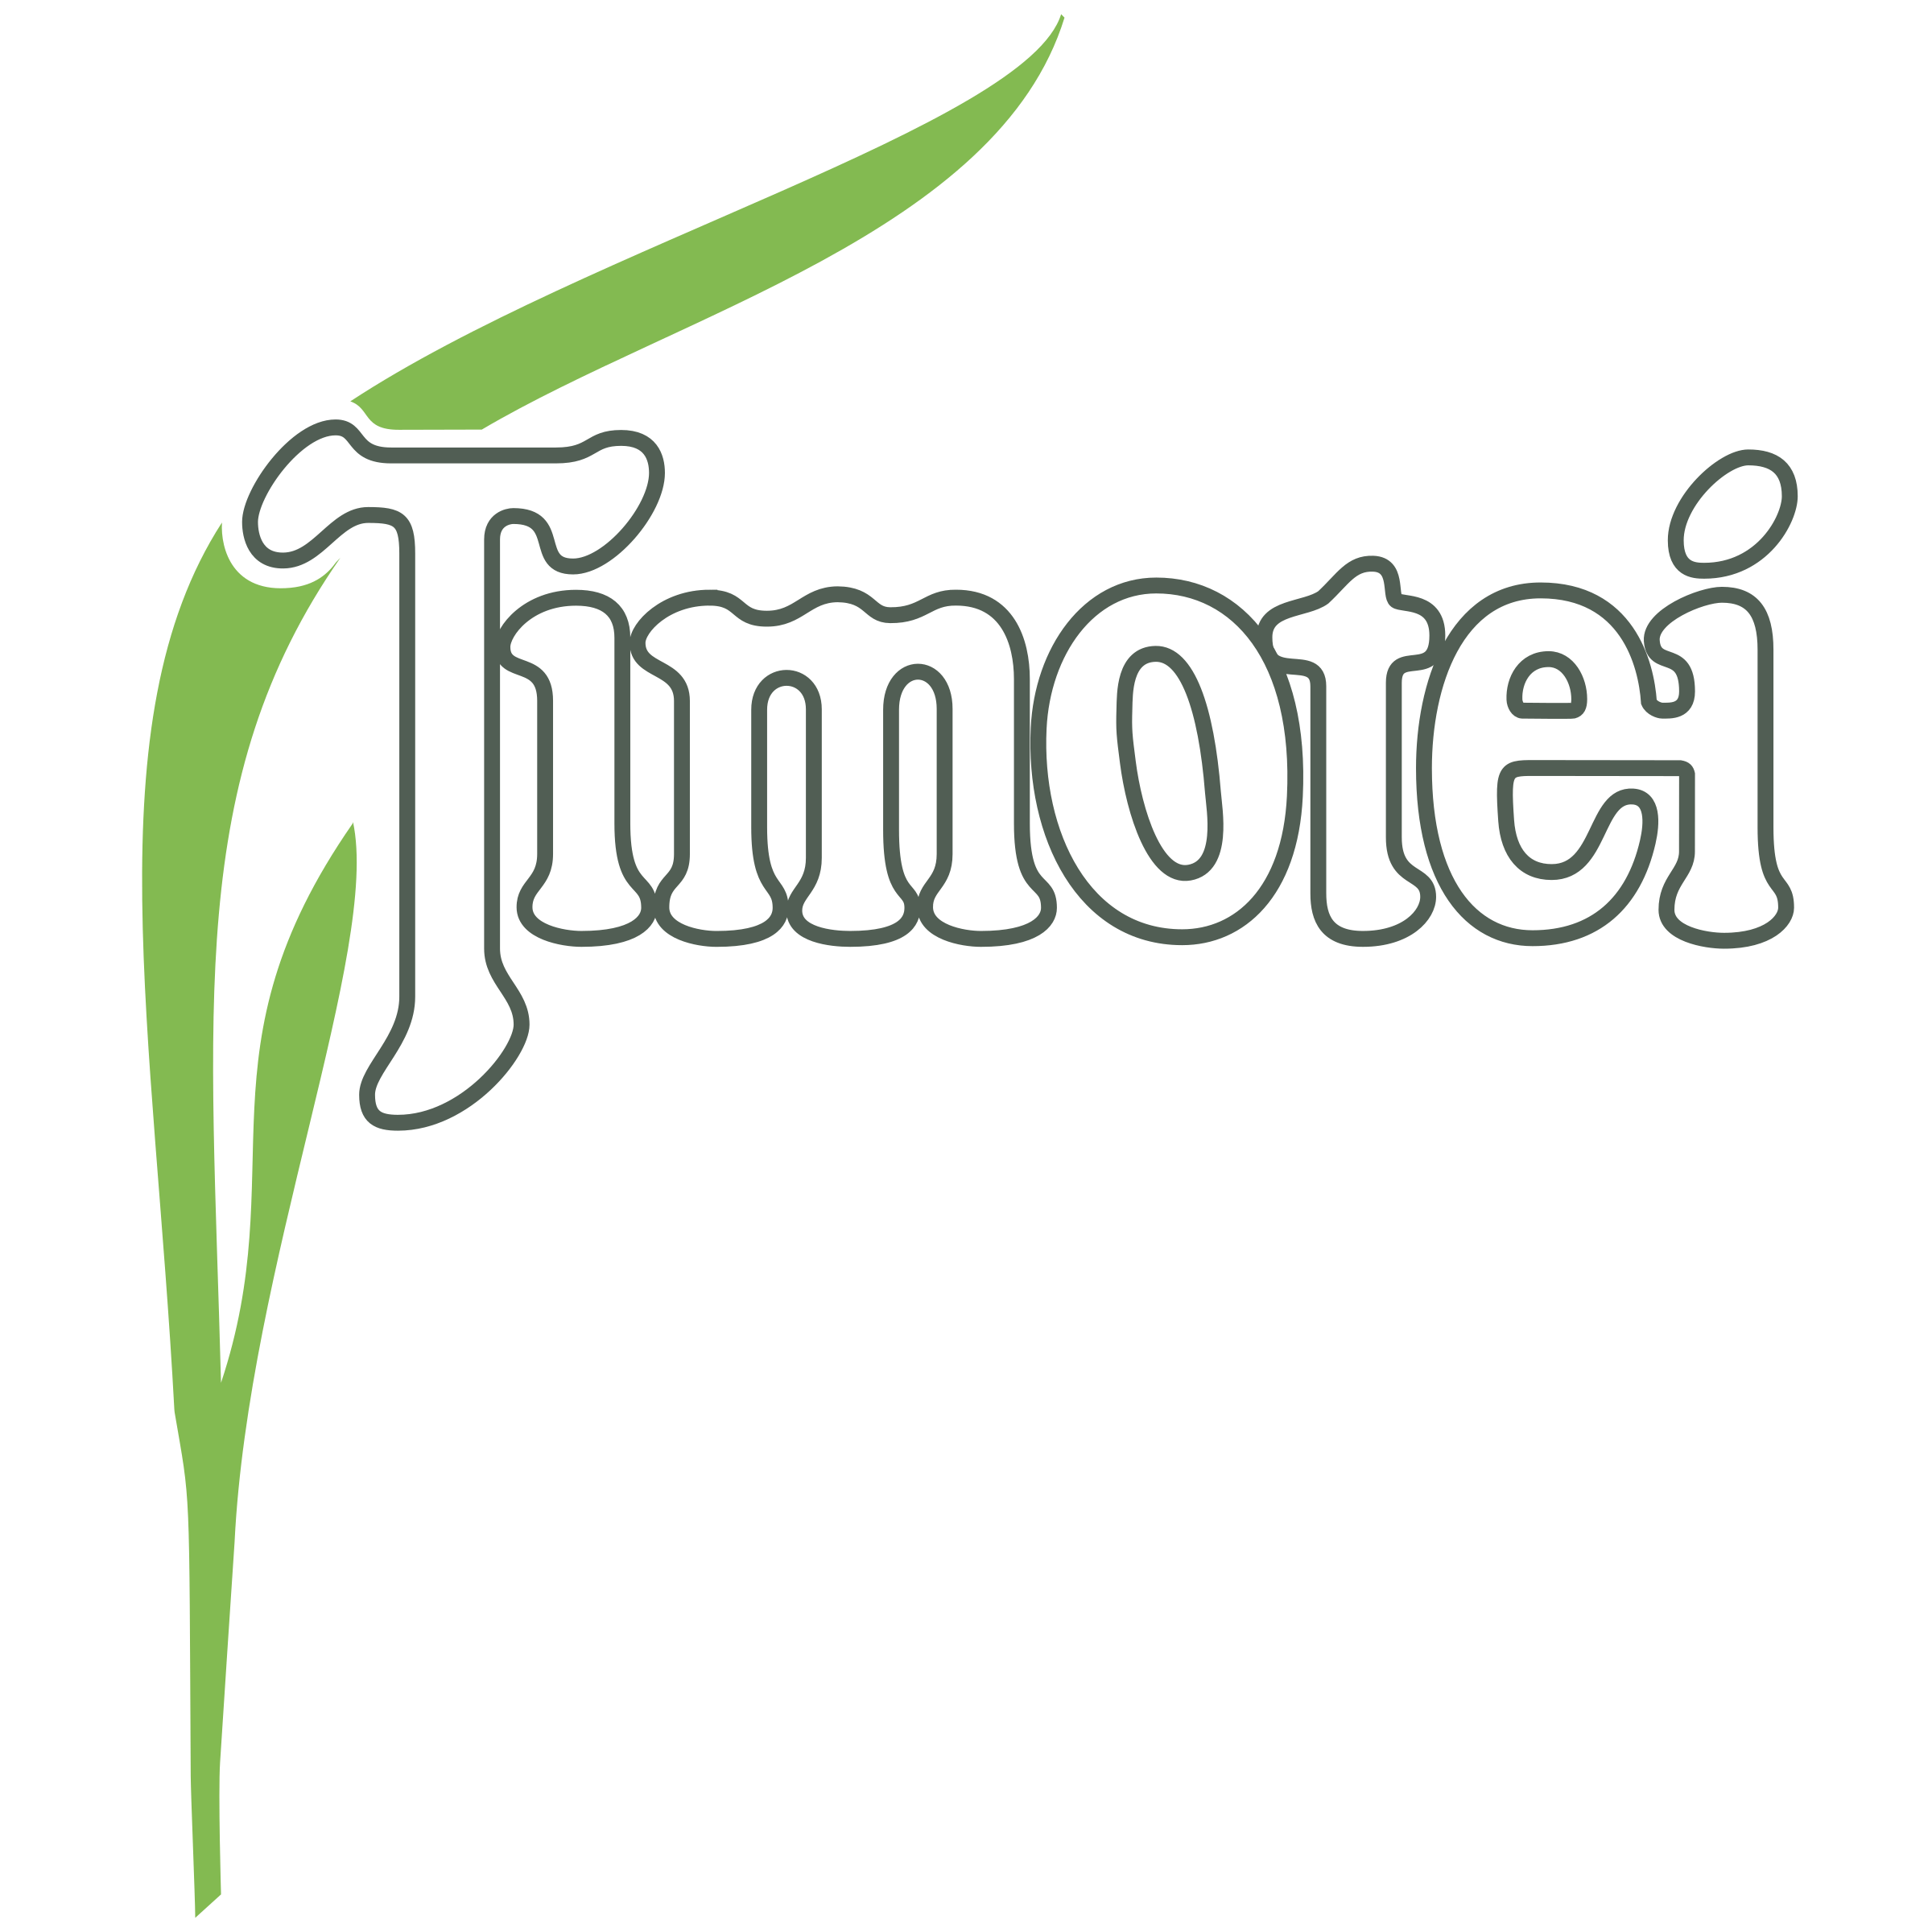 Timotei Logo - Timotei Logo PNG Transparent & SVG Vector